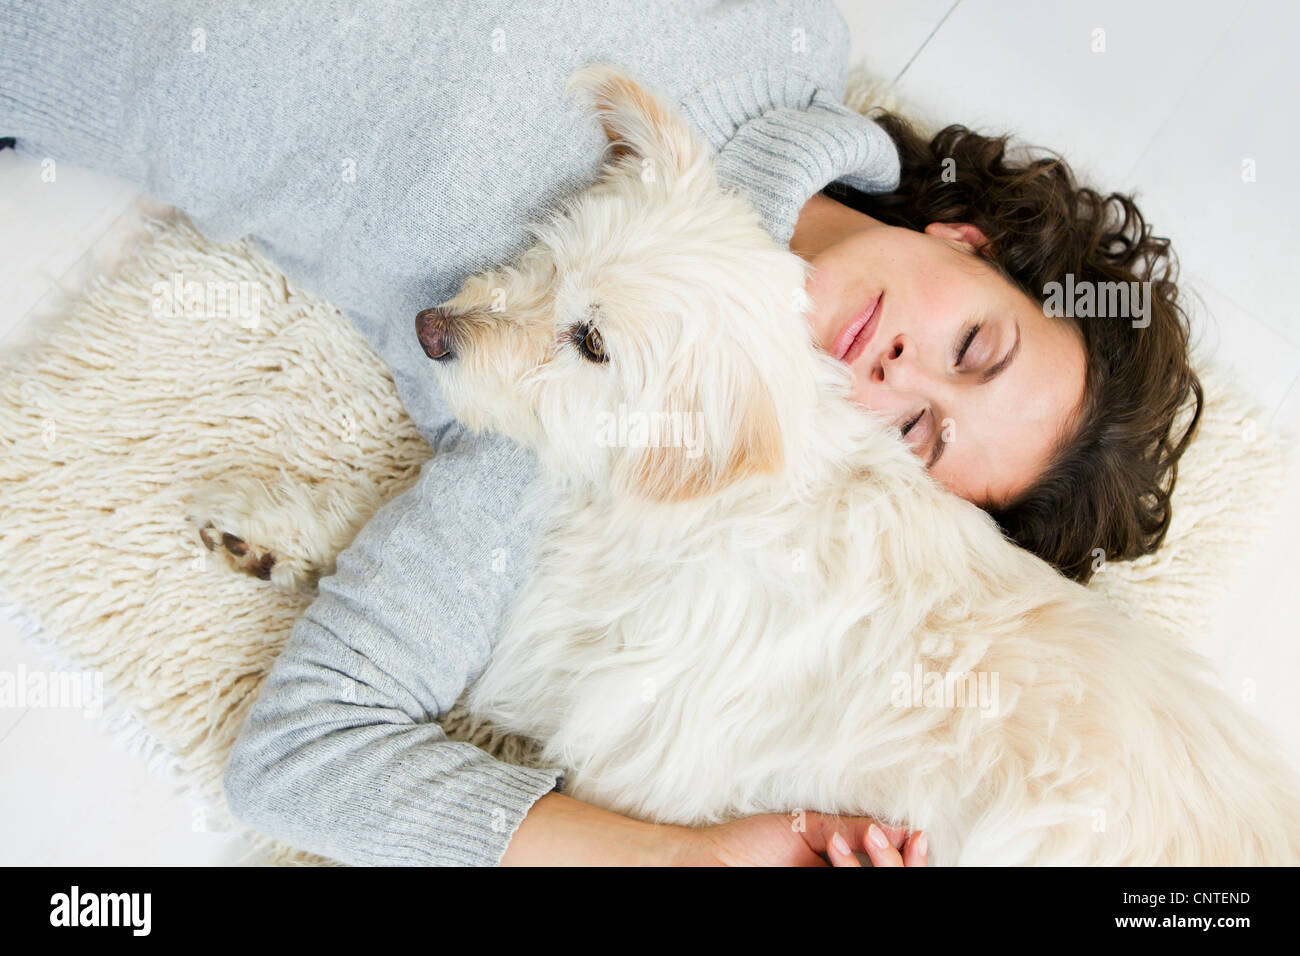 Frau mit Hund auf Teppich Stockfoto